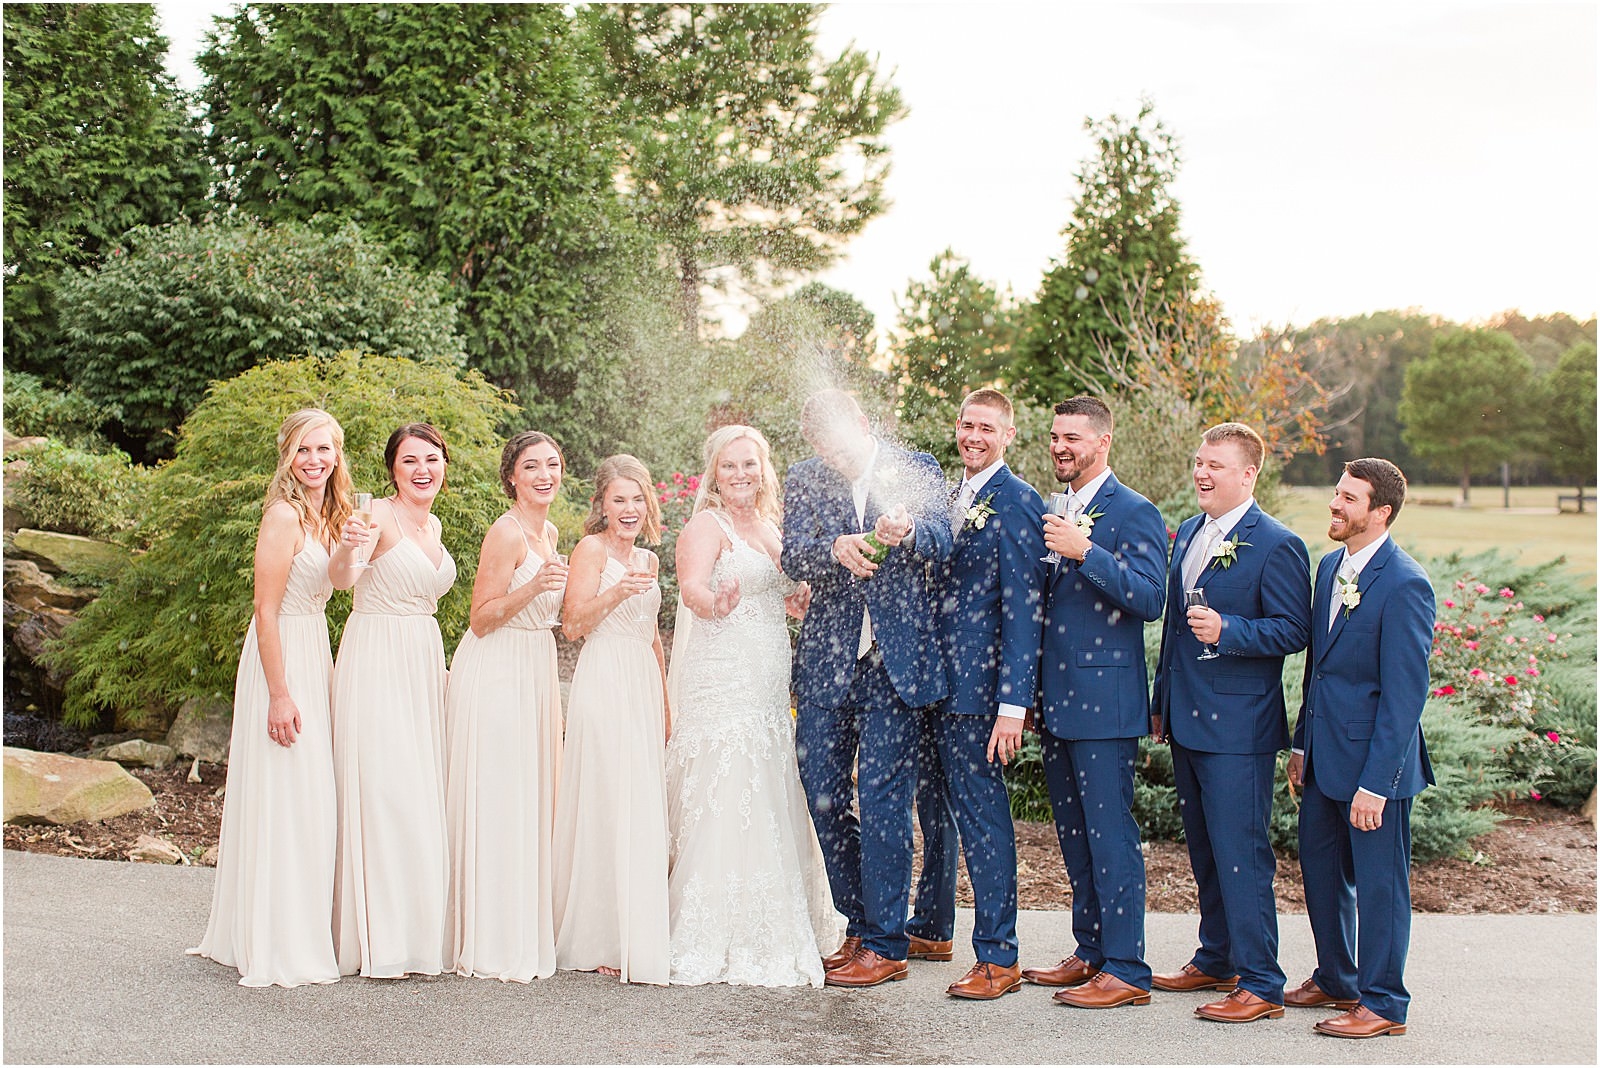 Kelsey and Caleb | Walkers Bluff Winery Wedding | Bret and Brandie Photography087.jpg